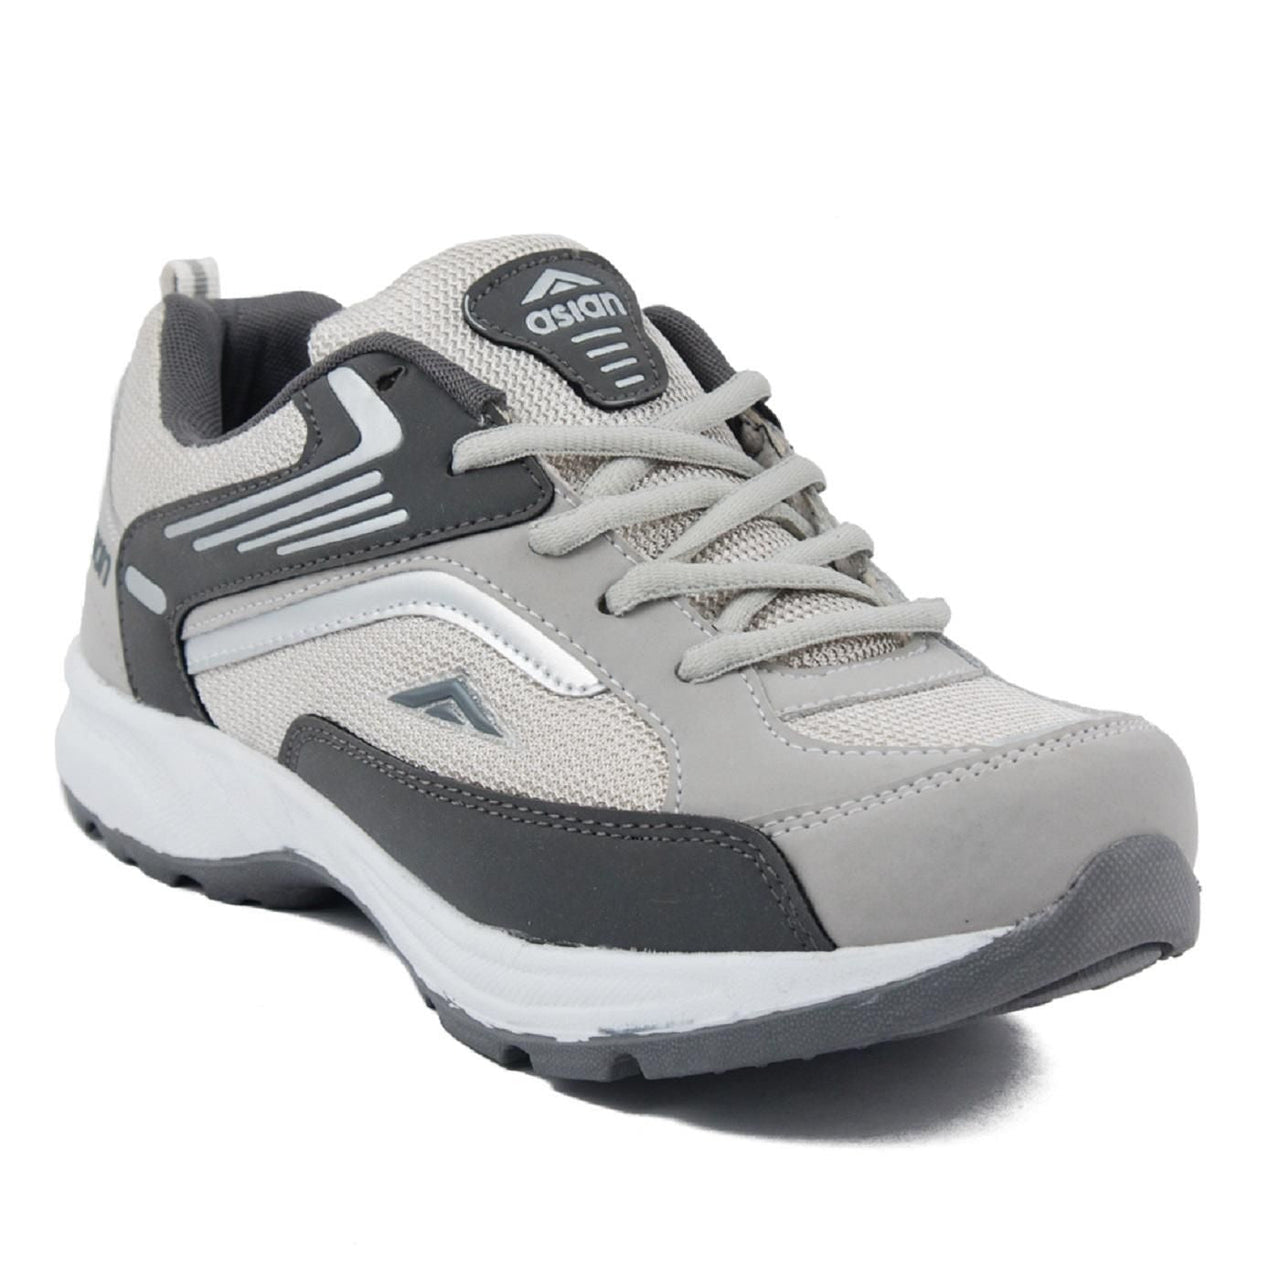 Asian Future-01 Grey Sports Shoes